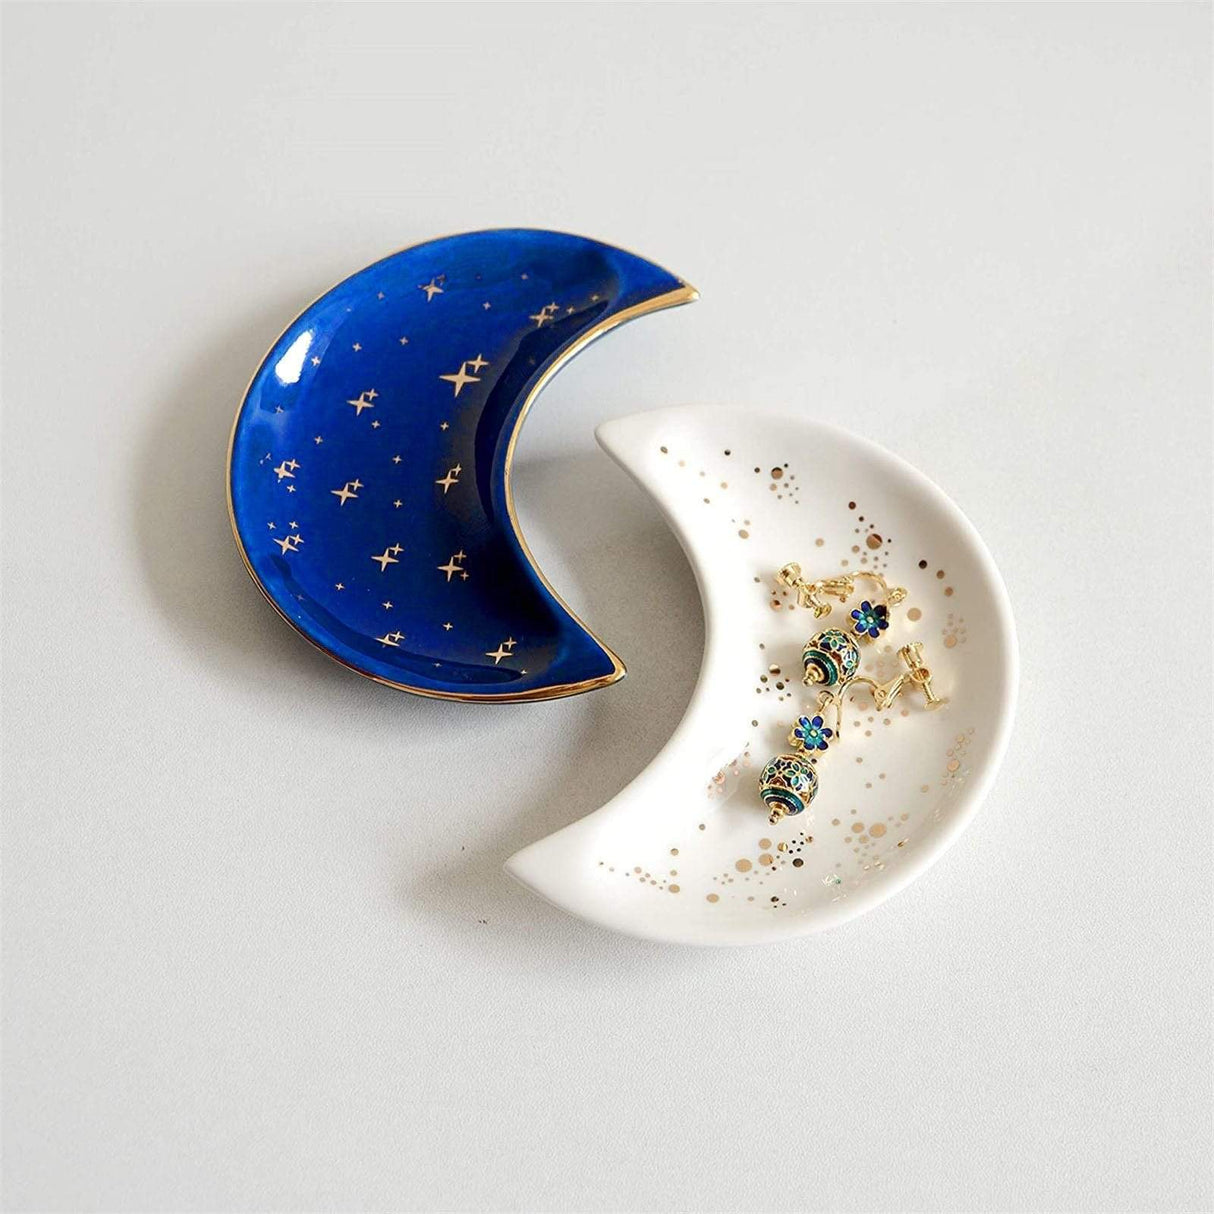 Crescent Moon Jewelry Tray